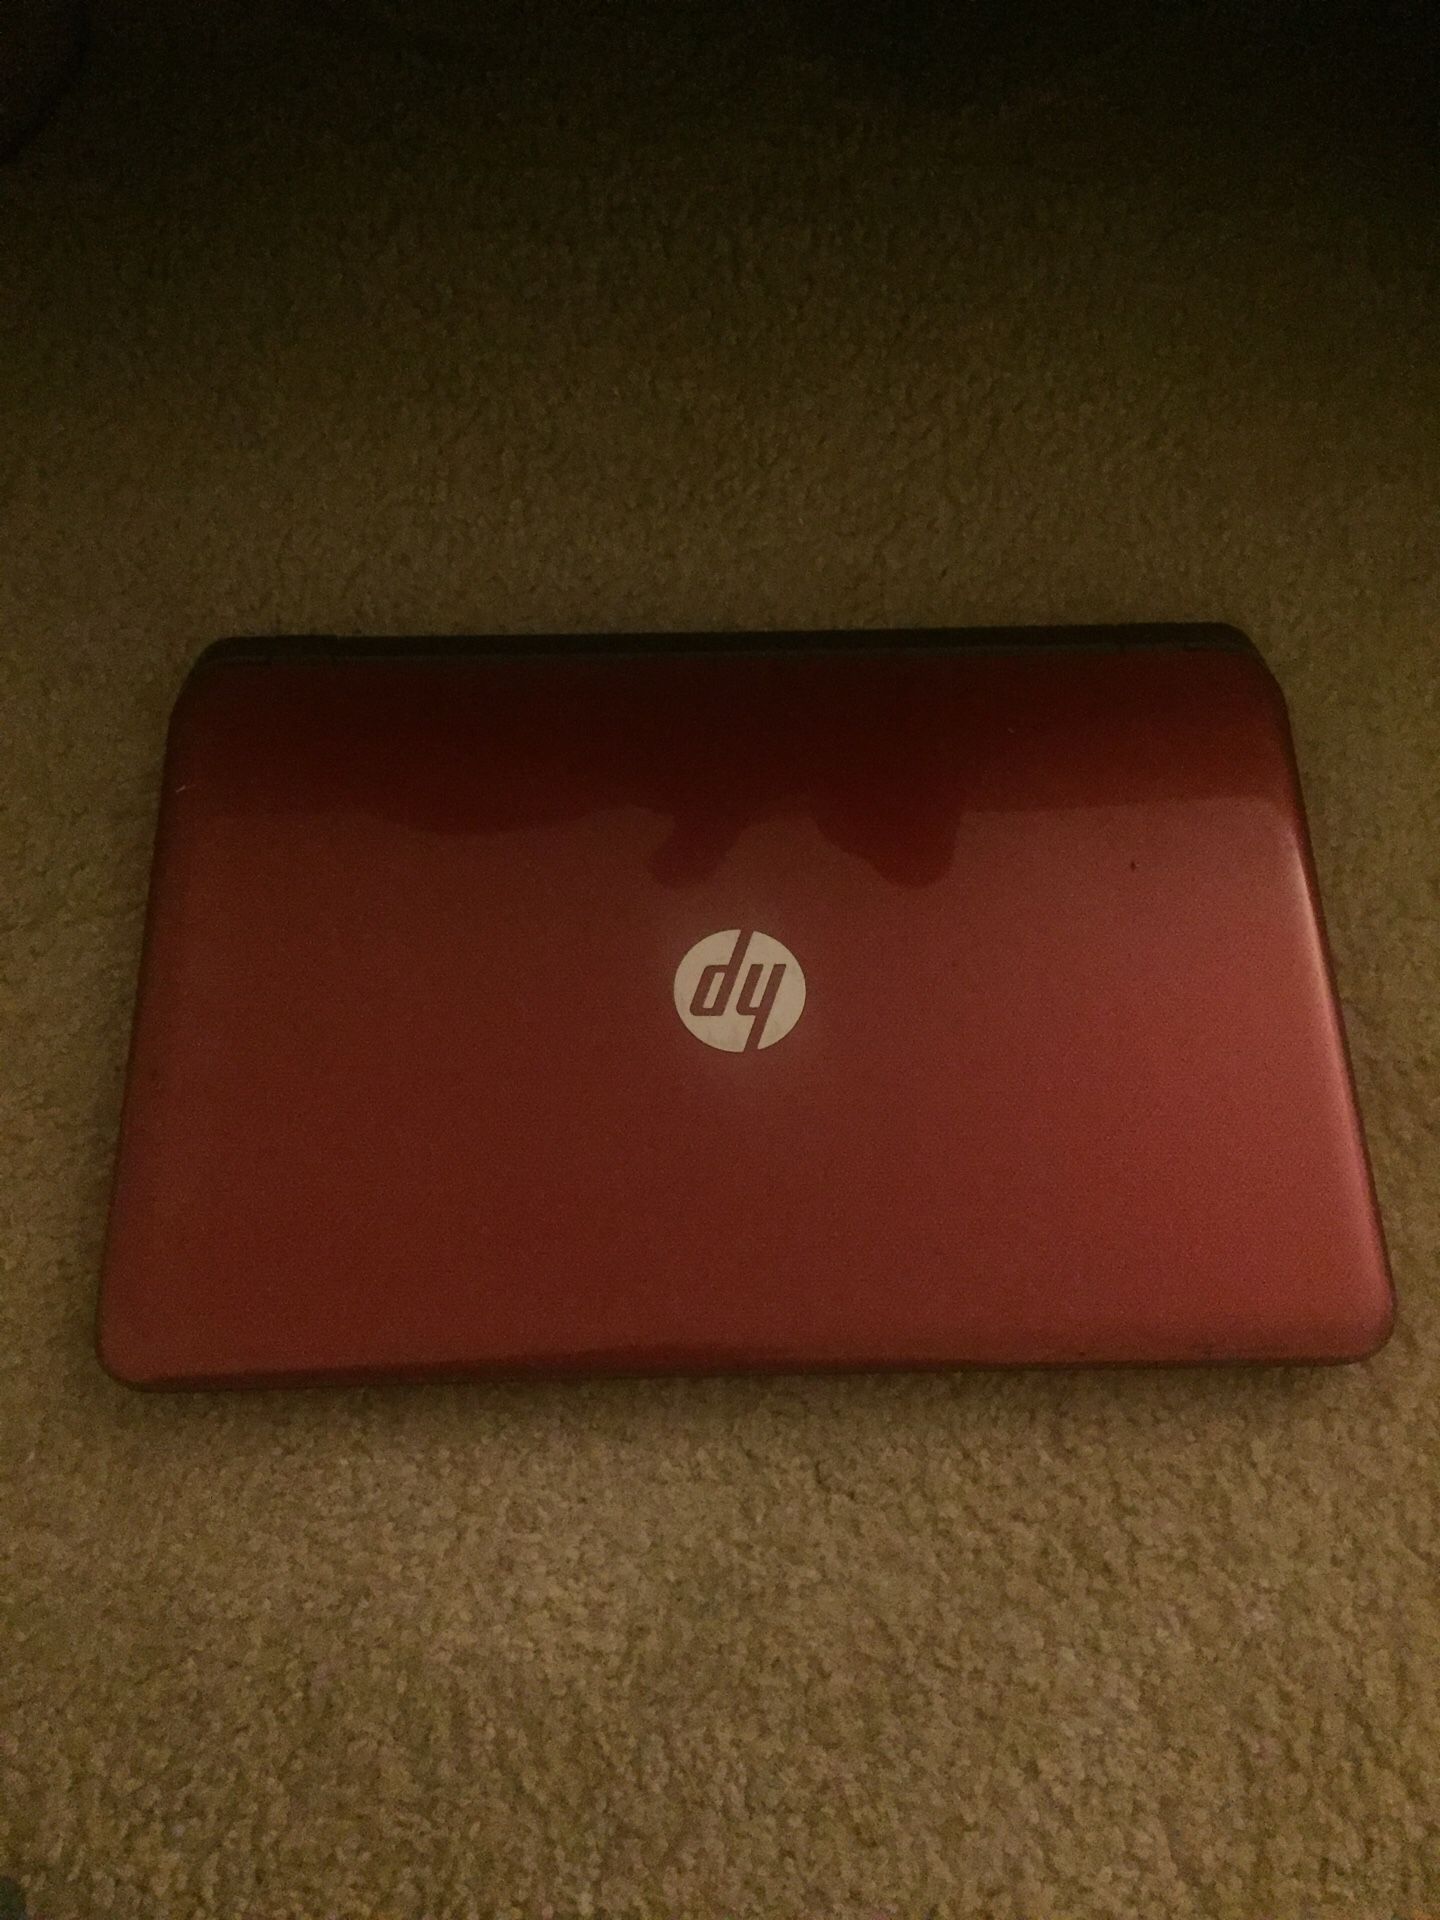 HP 15.6" Laptop, Intel Pentium N5000, 4GB RAM, 500GB HDD, Windows 10, 15-bs234wm, Red